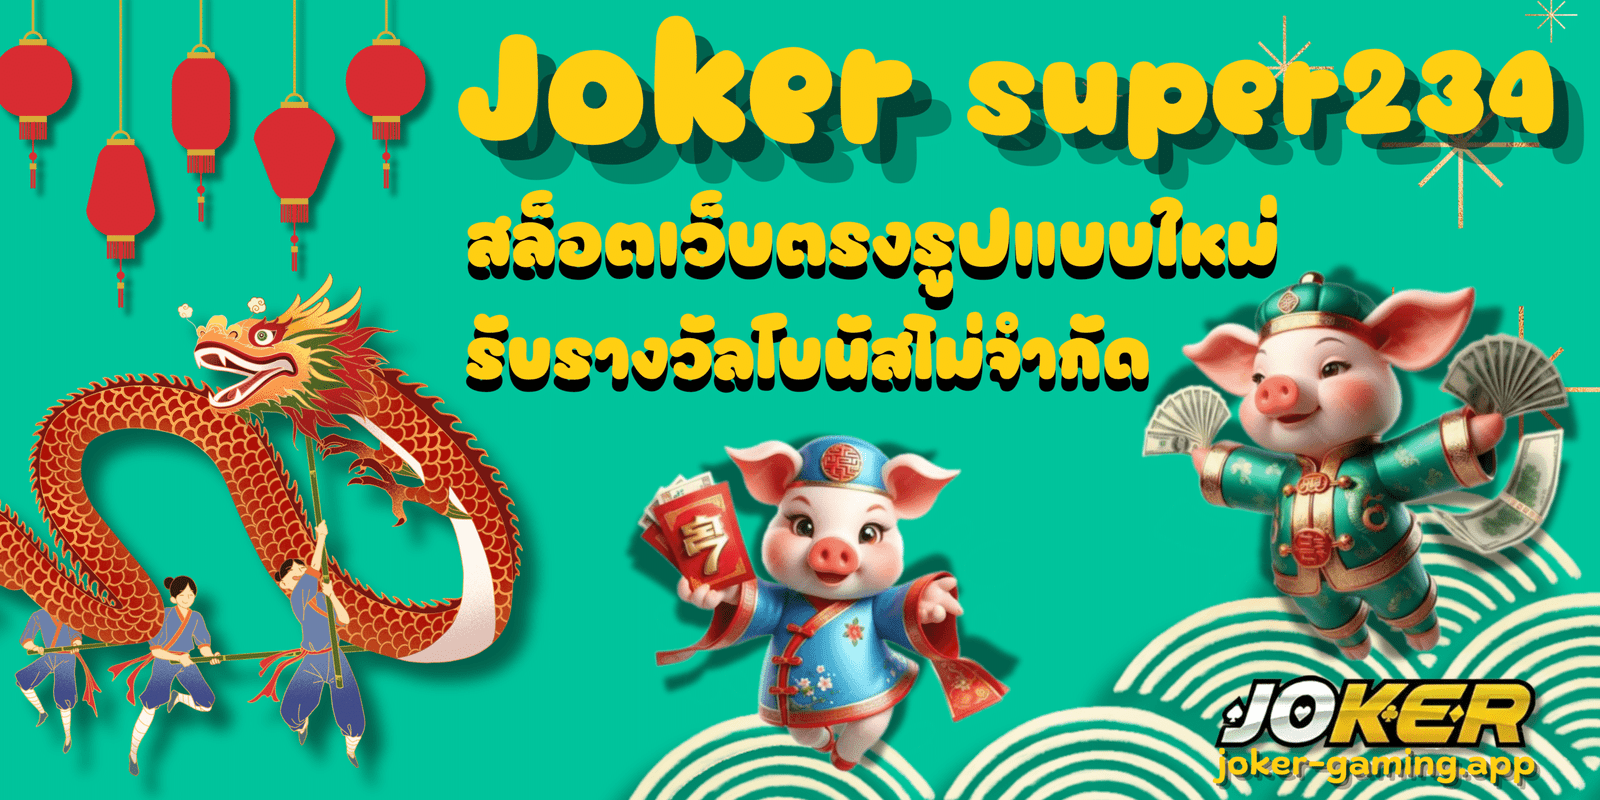 Joker-super234